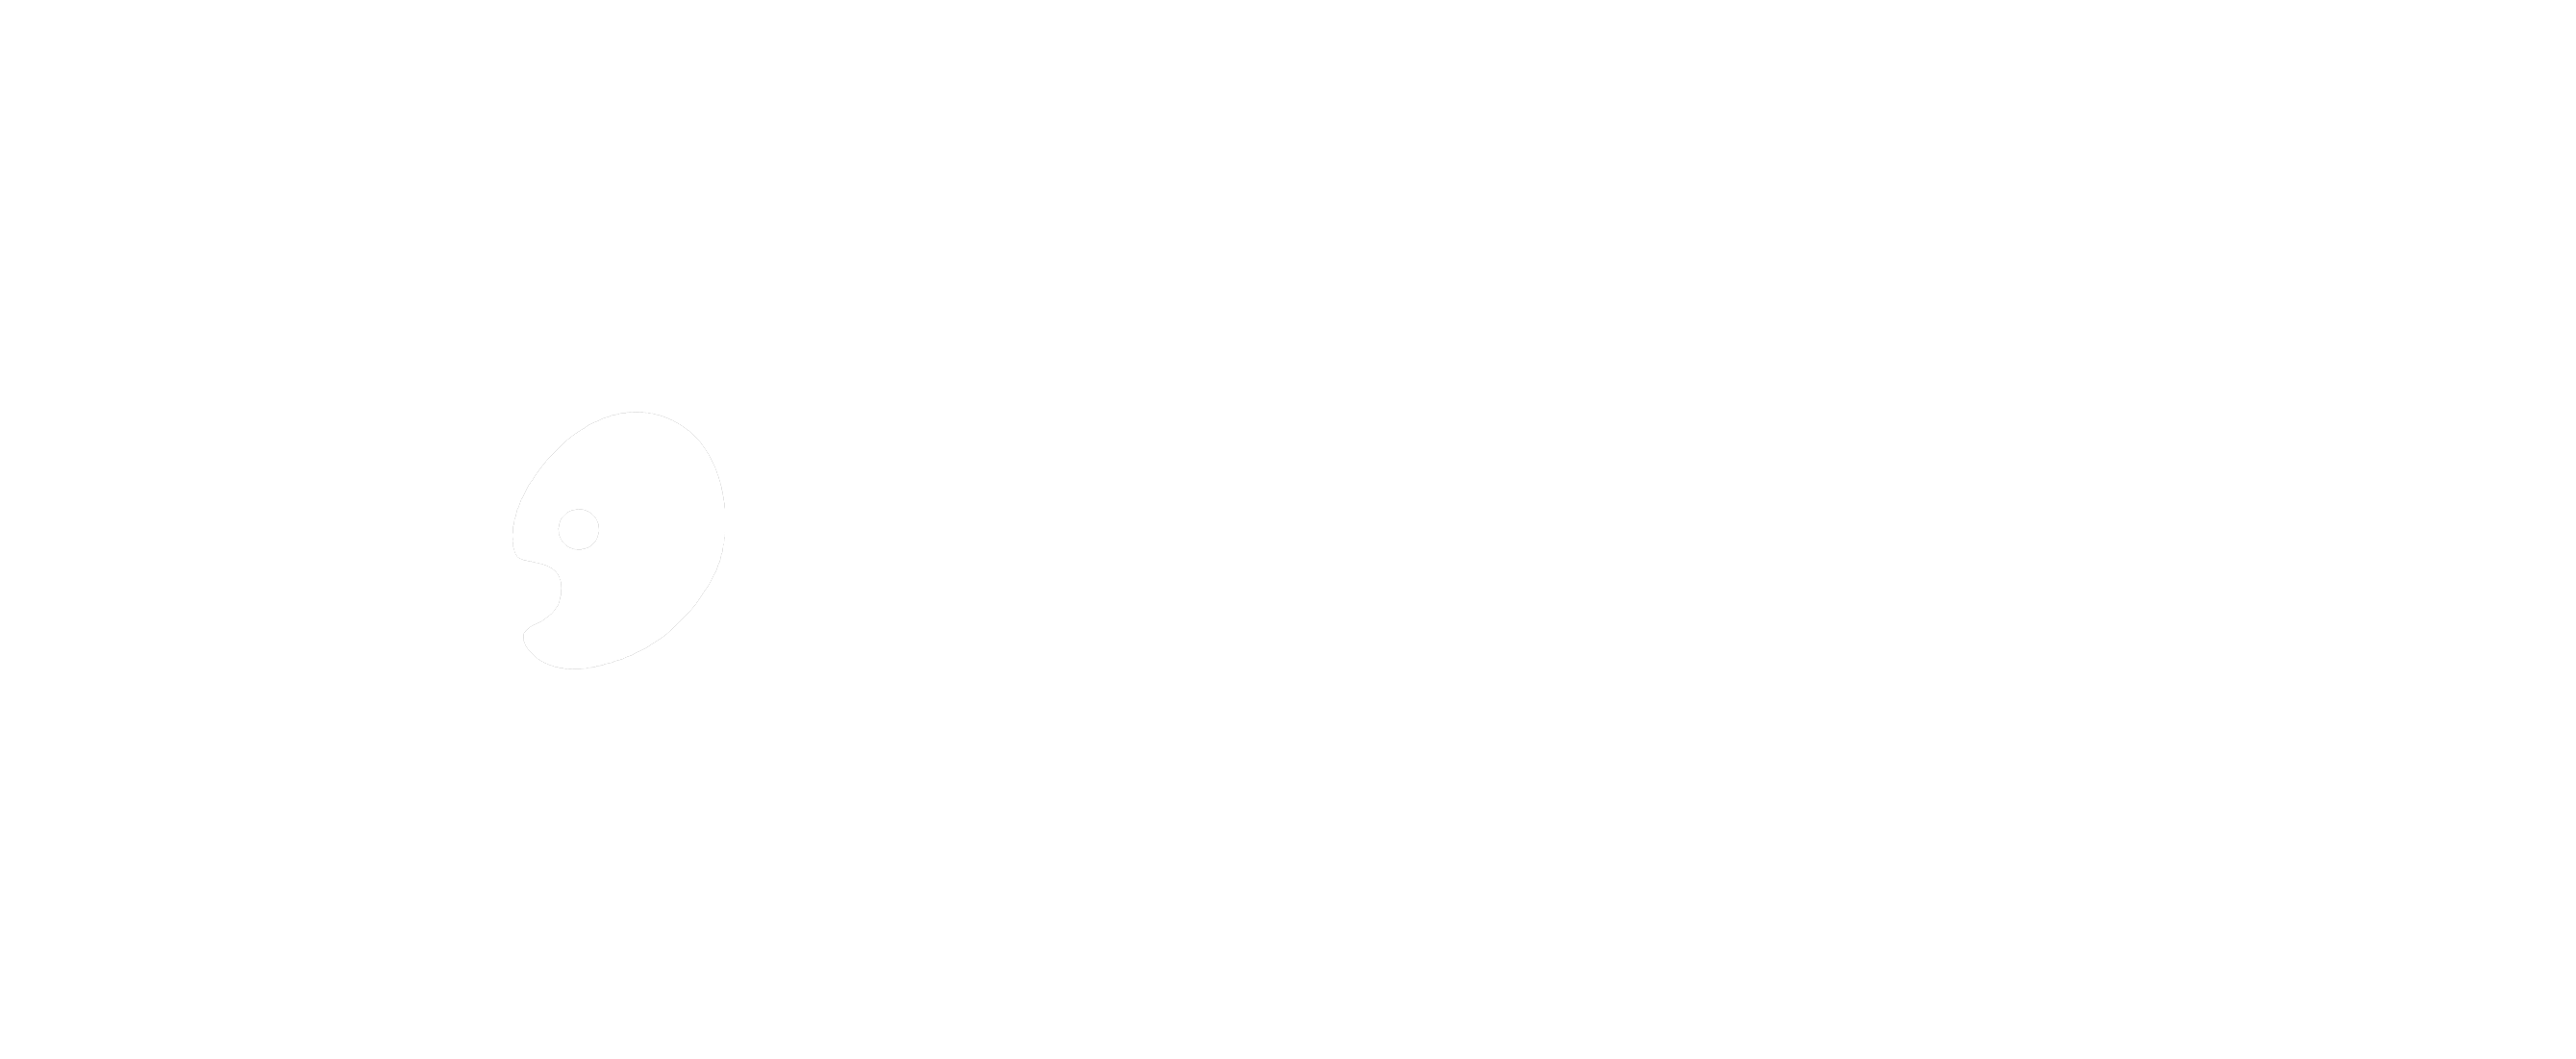 IGLOBAL3D.es – Infografia 3d y diseño gráfico – comunicación visual y  diseño. renders, arq, infografias 3d, diseño, pamplona, navarra (design – 3d models)